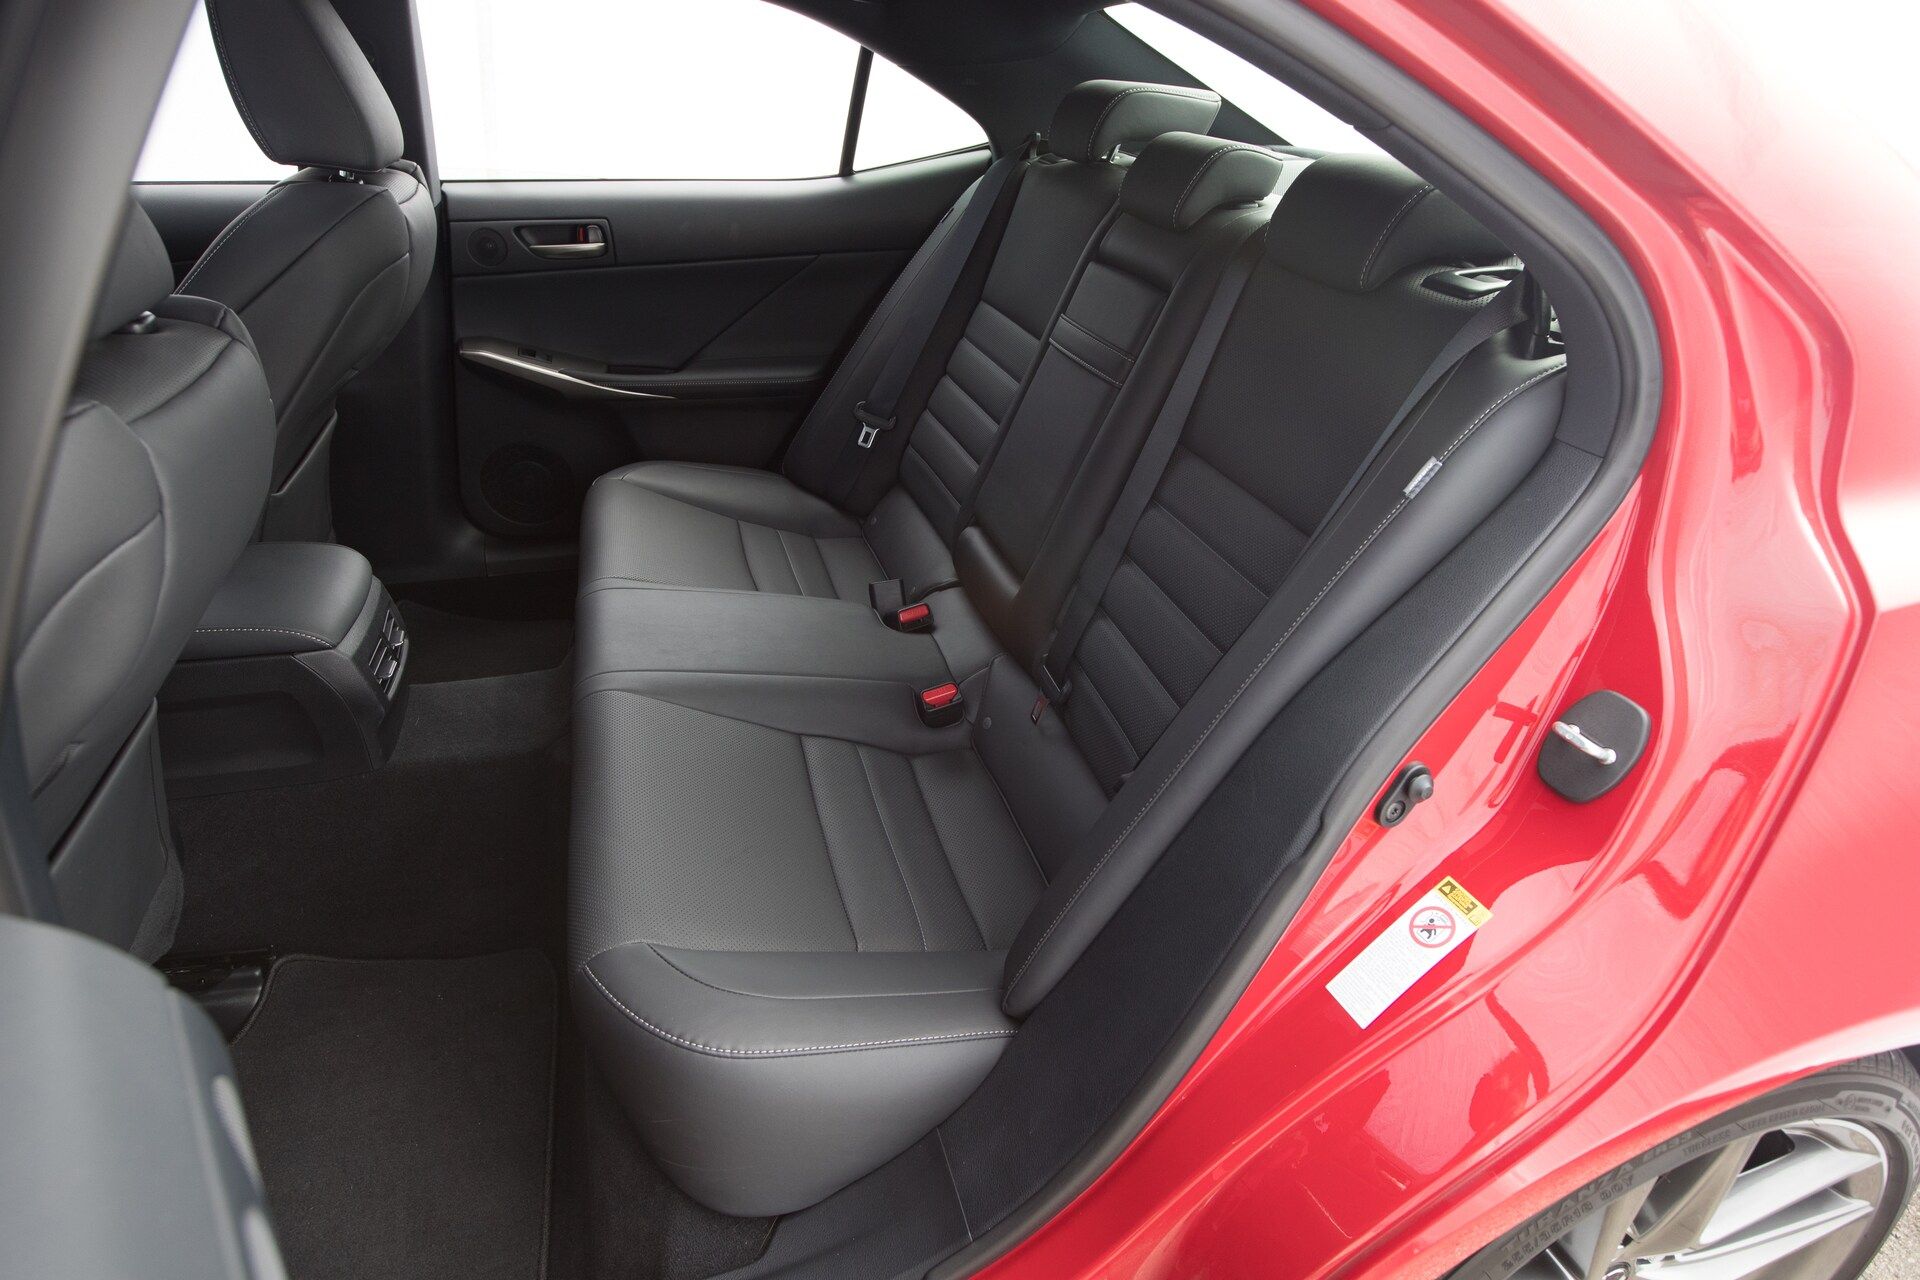 2017 Lexus Is 200t Rear Interior Seats (Gallery 42 of 51)